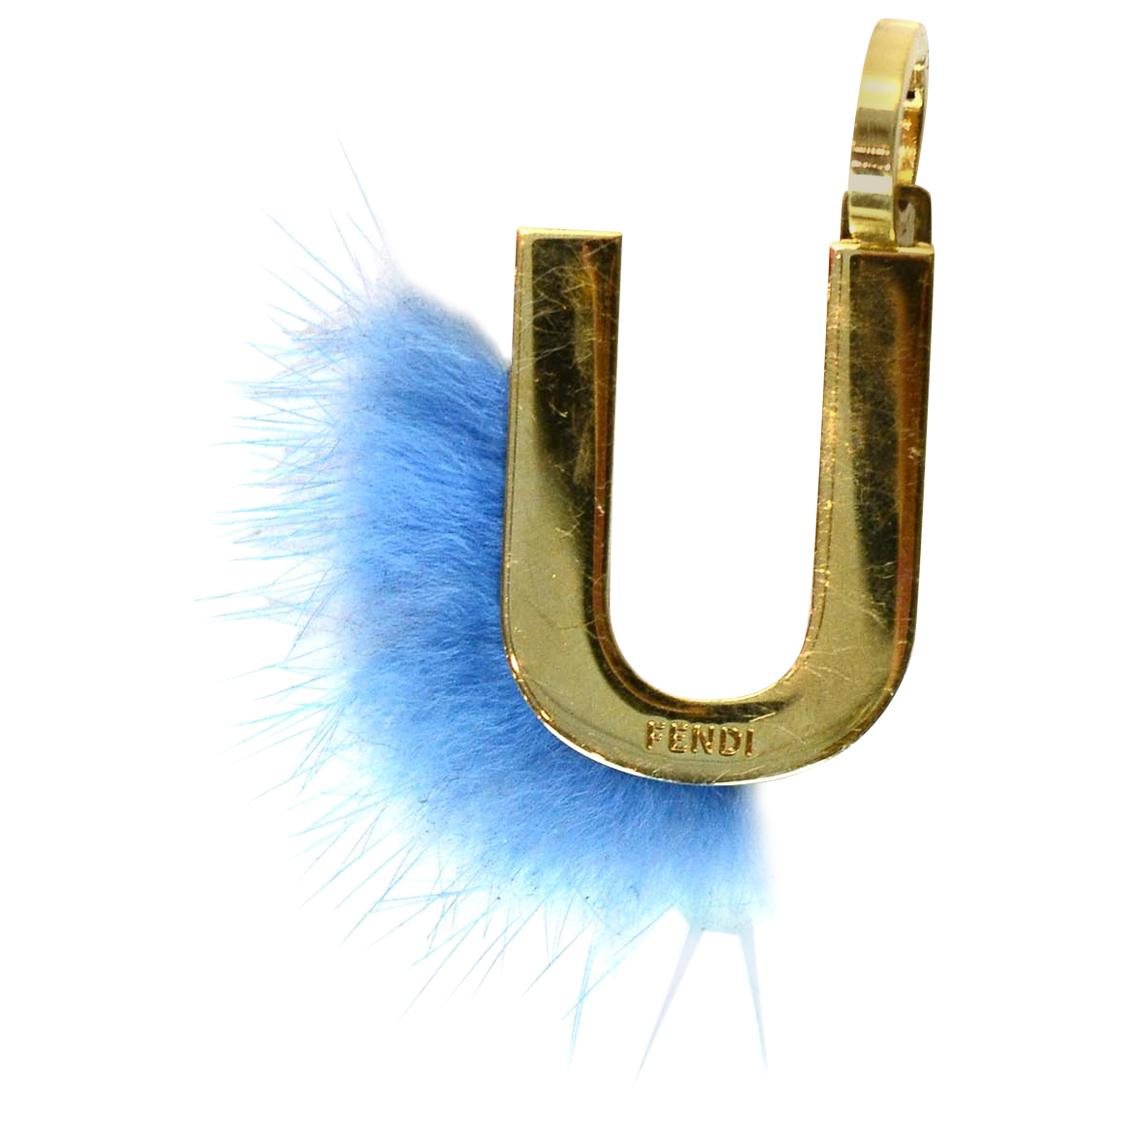 Fendi Gold/Blue Mink Fur-Trimmed U Initial Bag Charm